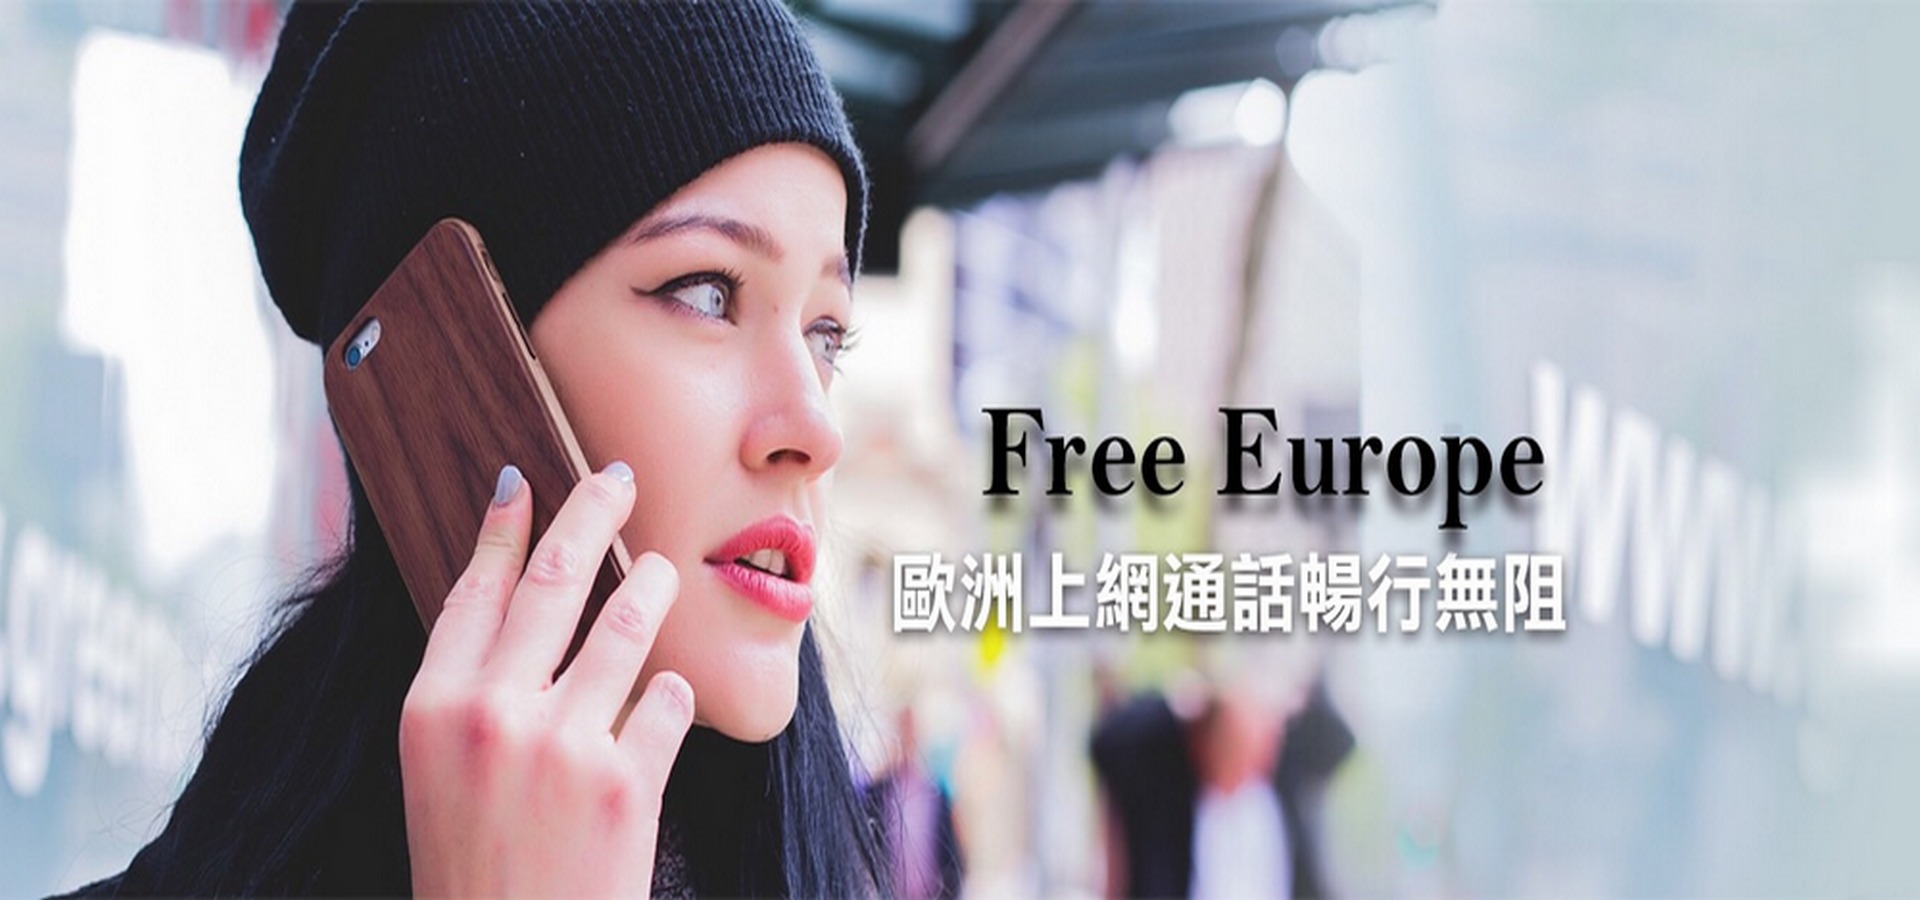 Europa & Taiwan Ltd